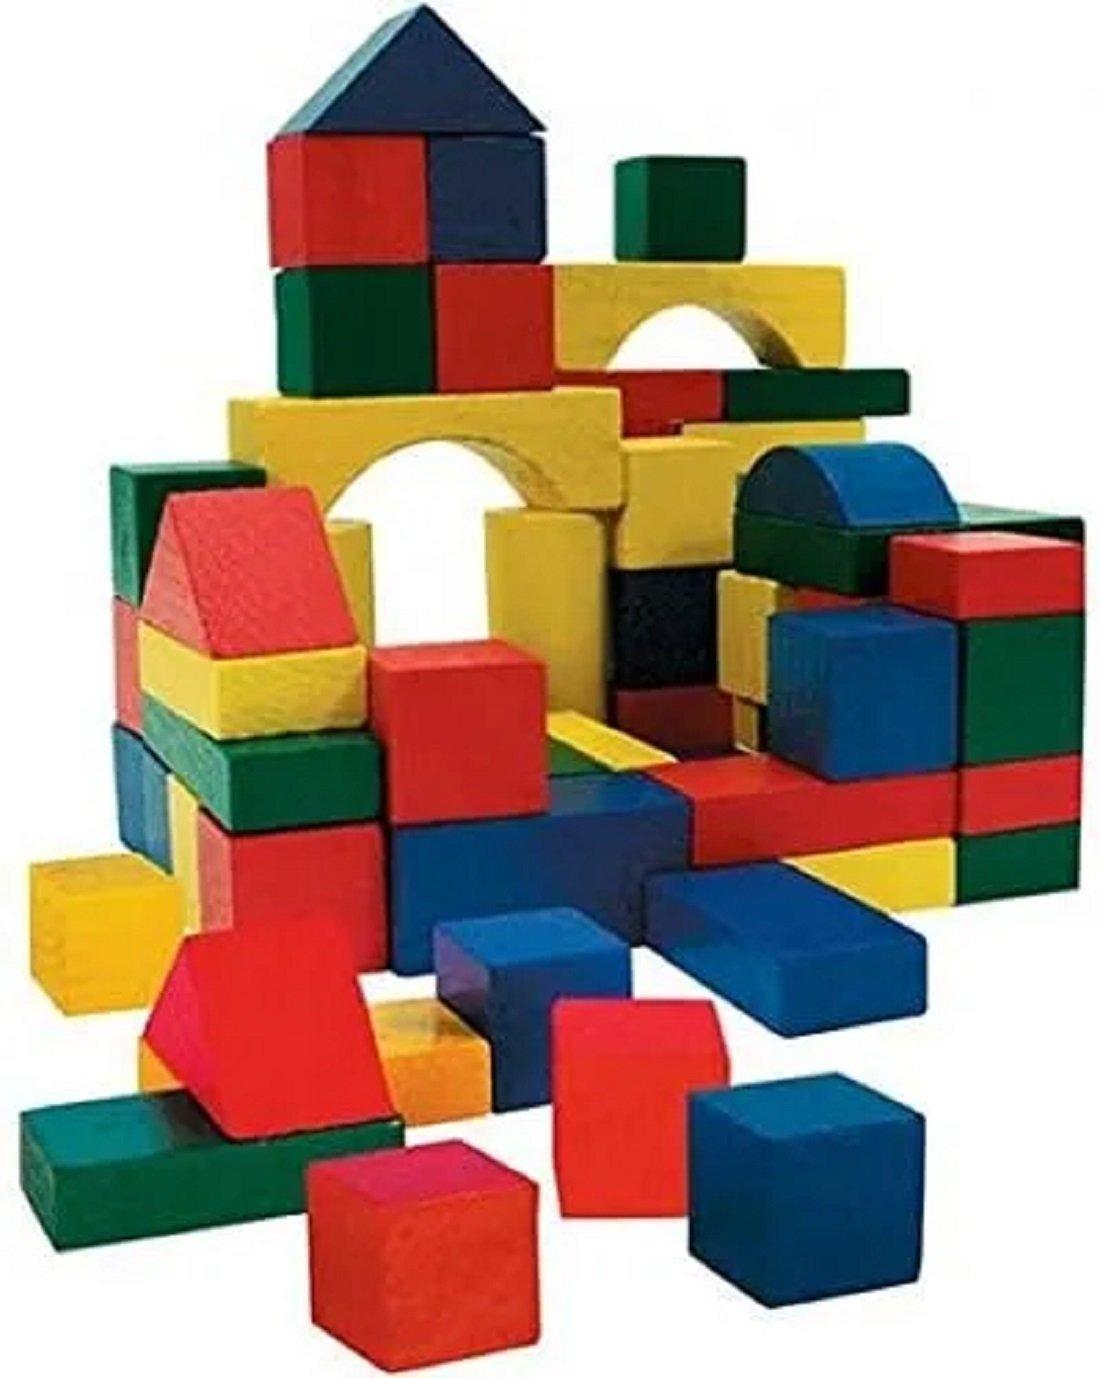 Wooden Building Blocks for Children - 75Peice